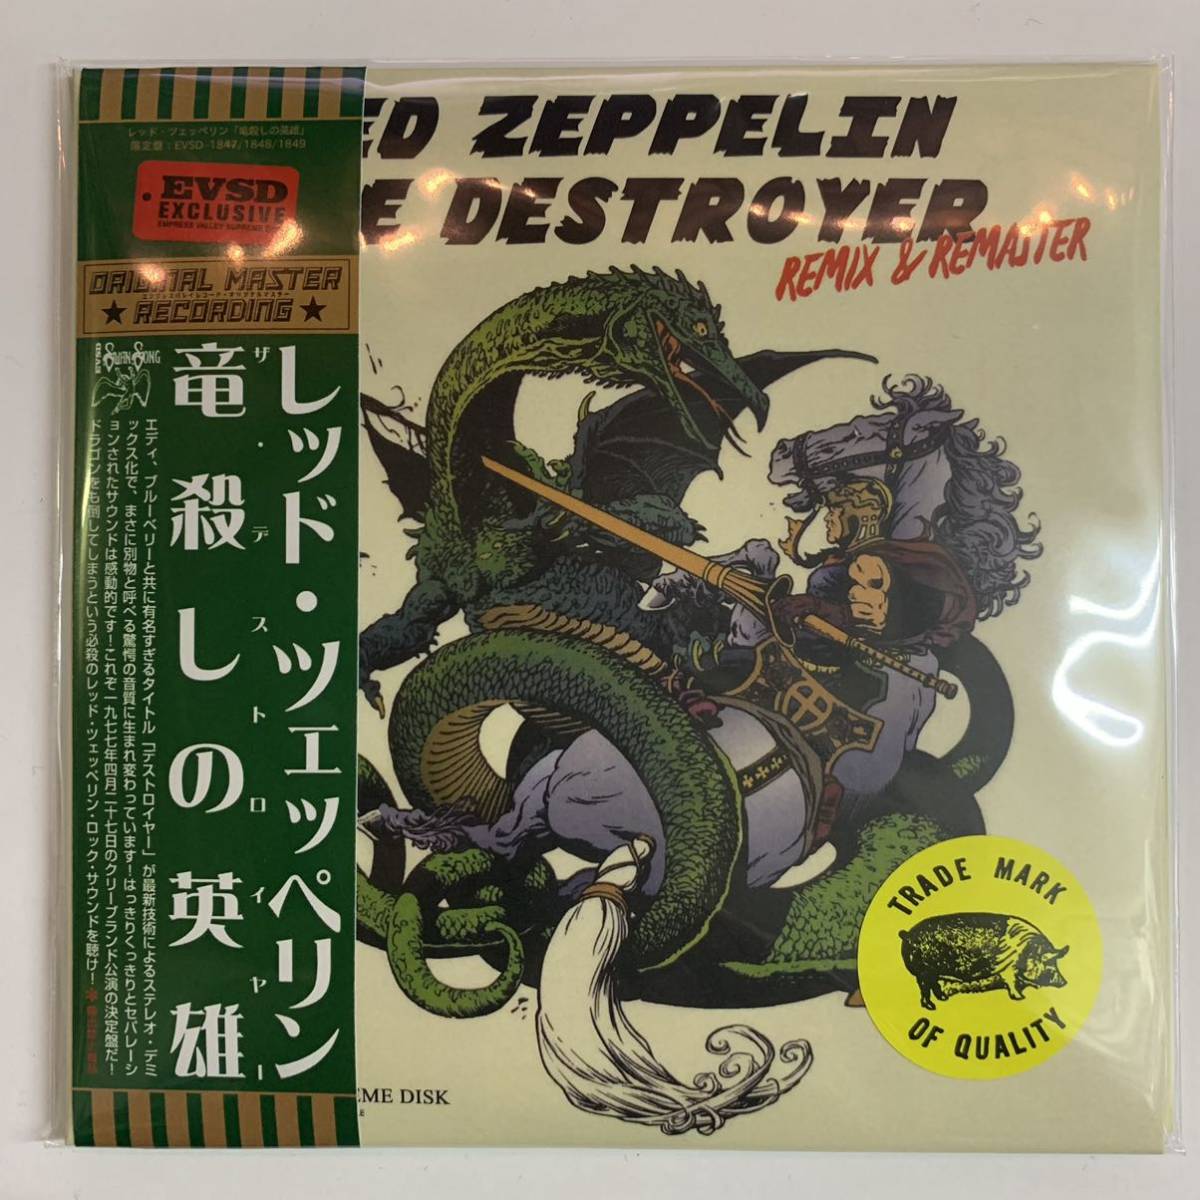 LED ZEPPELIN / THE DESTROYER Remix & Remaster TMOQ version (3CD 